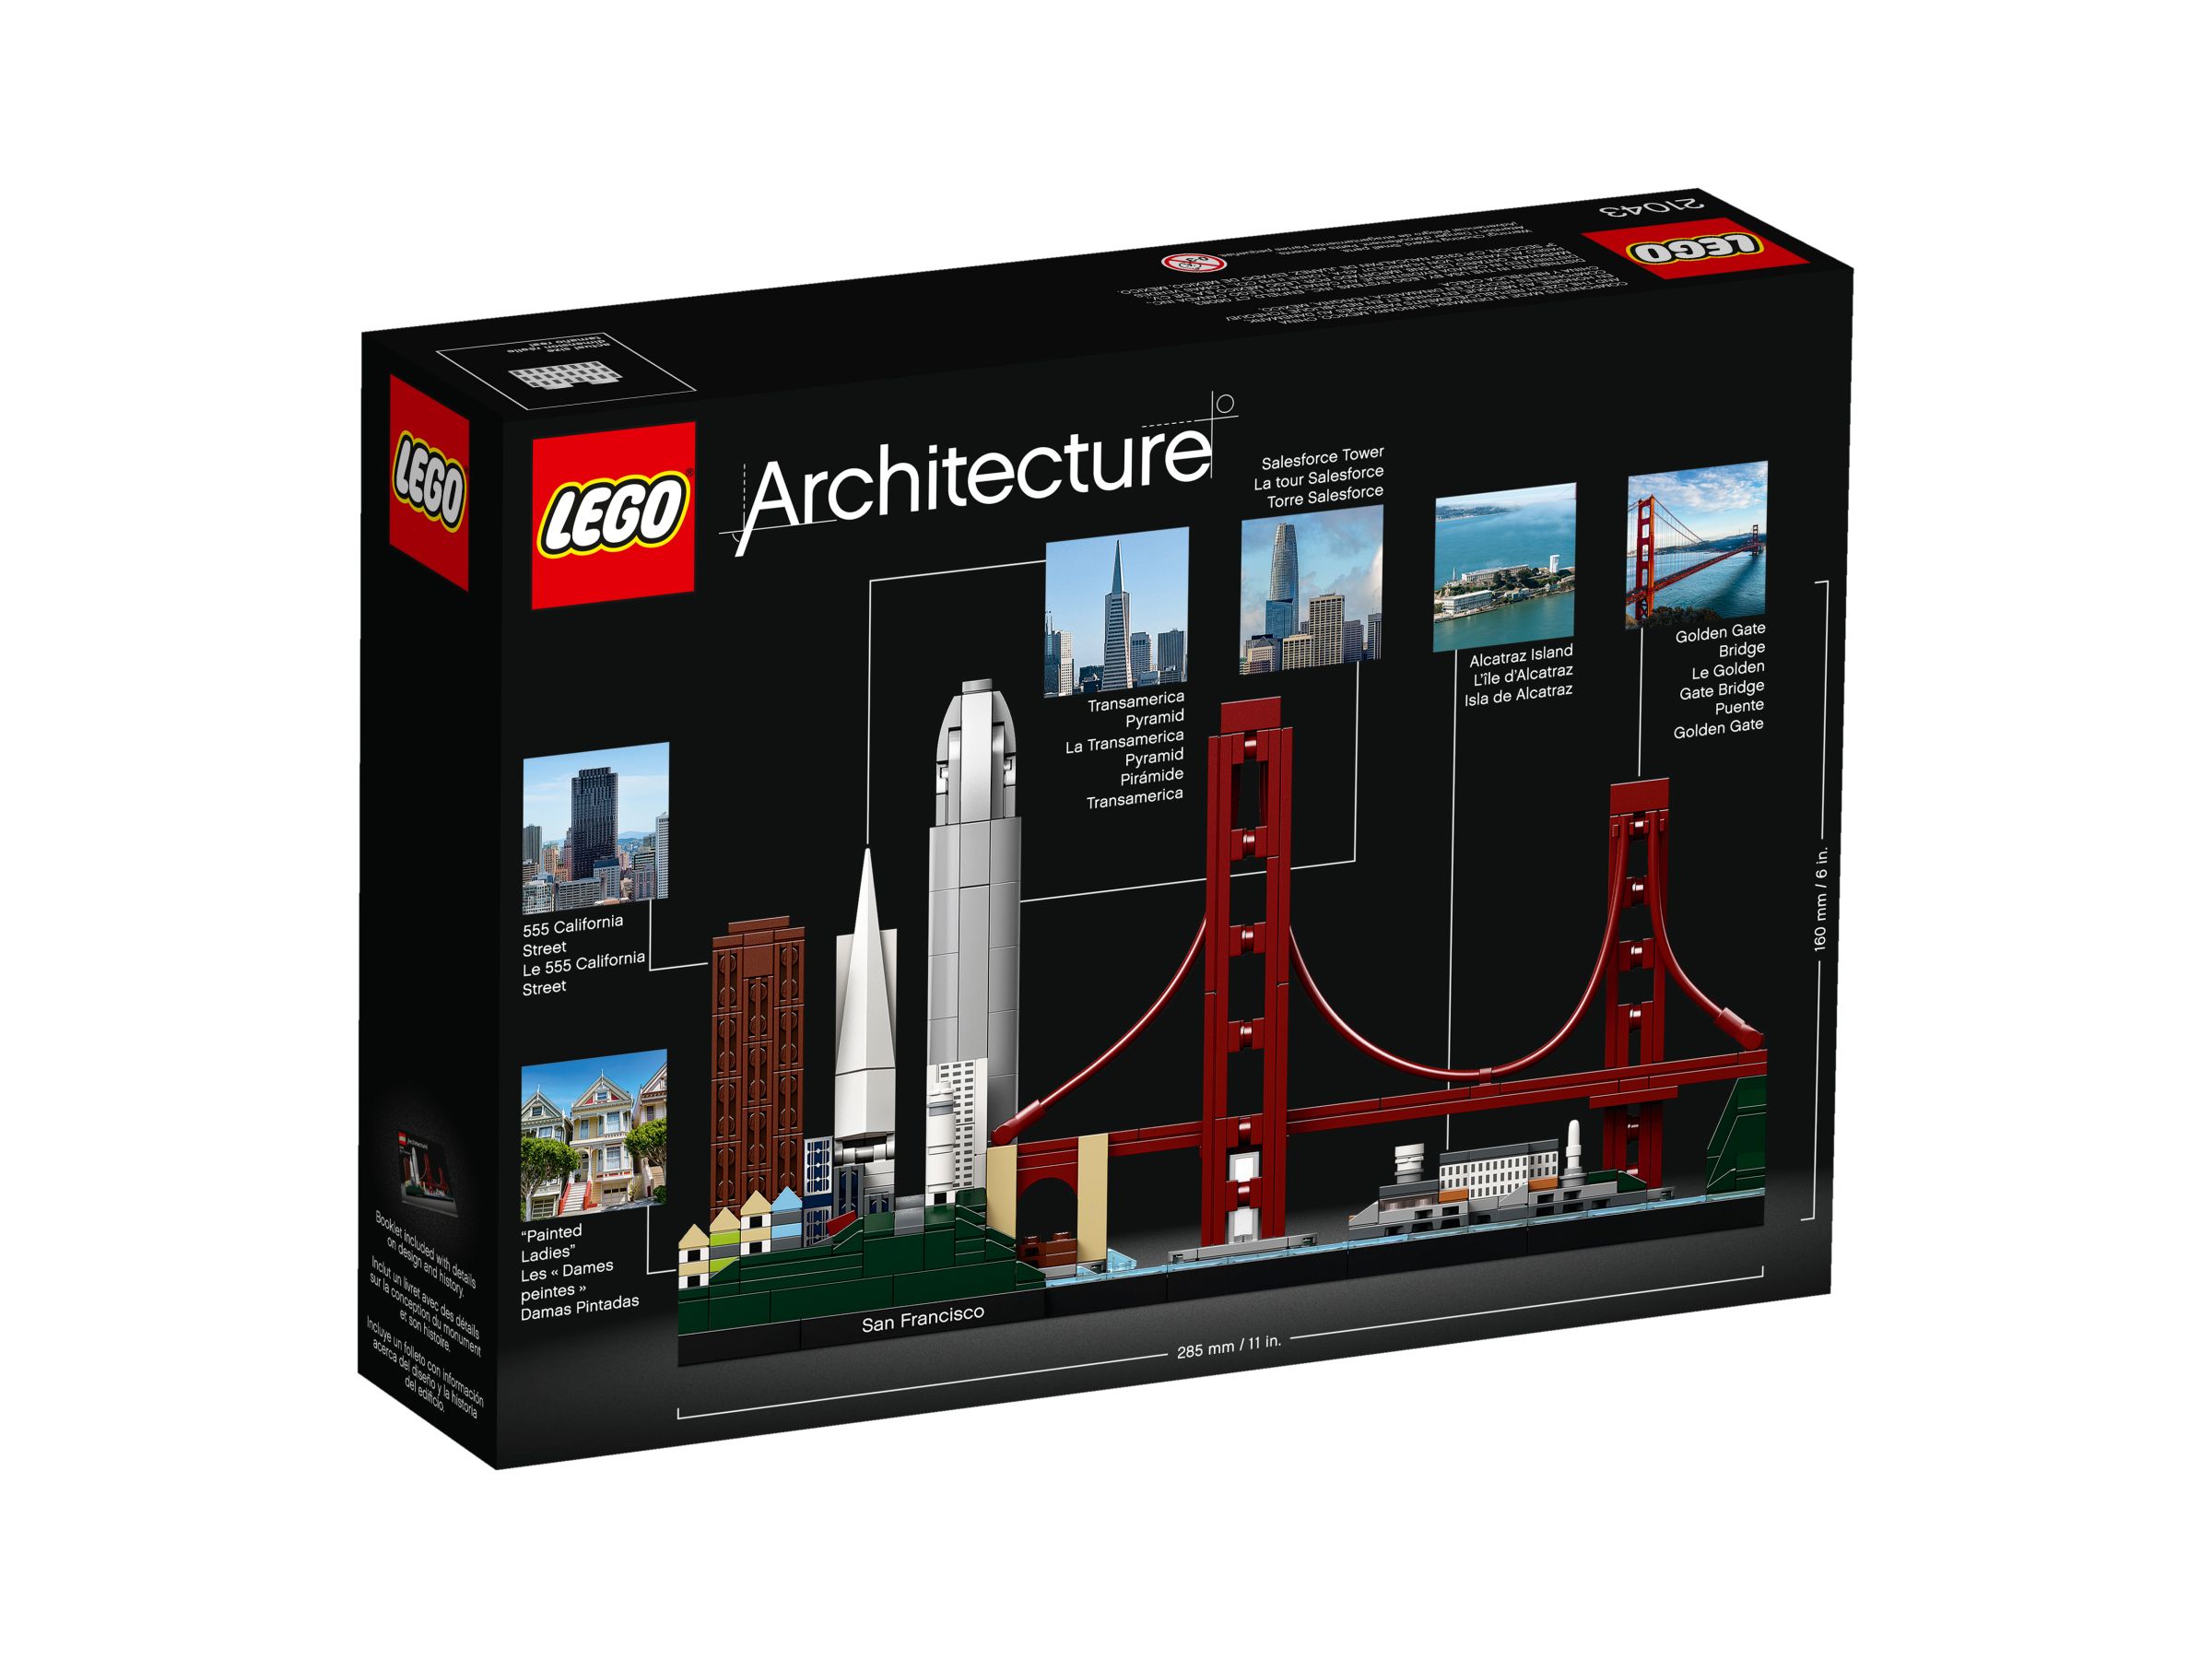 LEGO Architecture 21043 San Francisco LEGO_21043_alt4.jpg